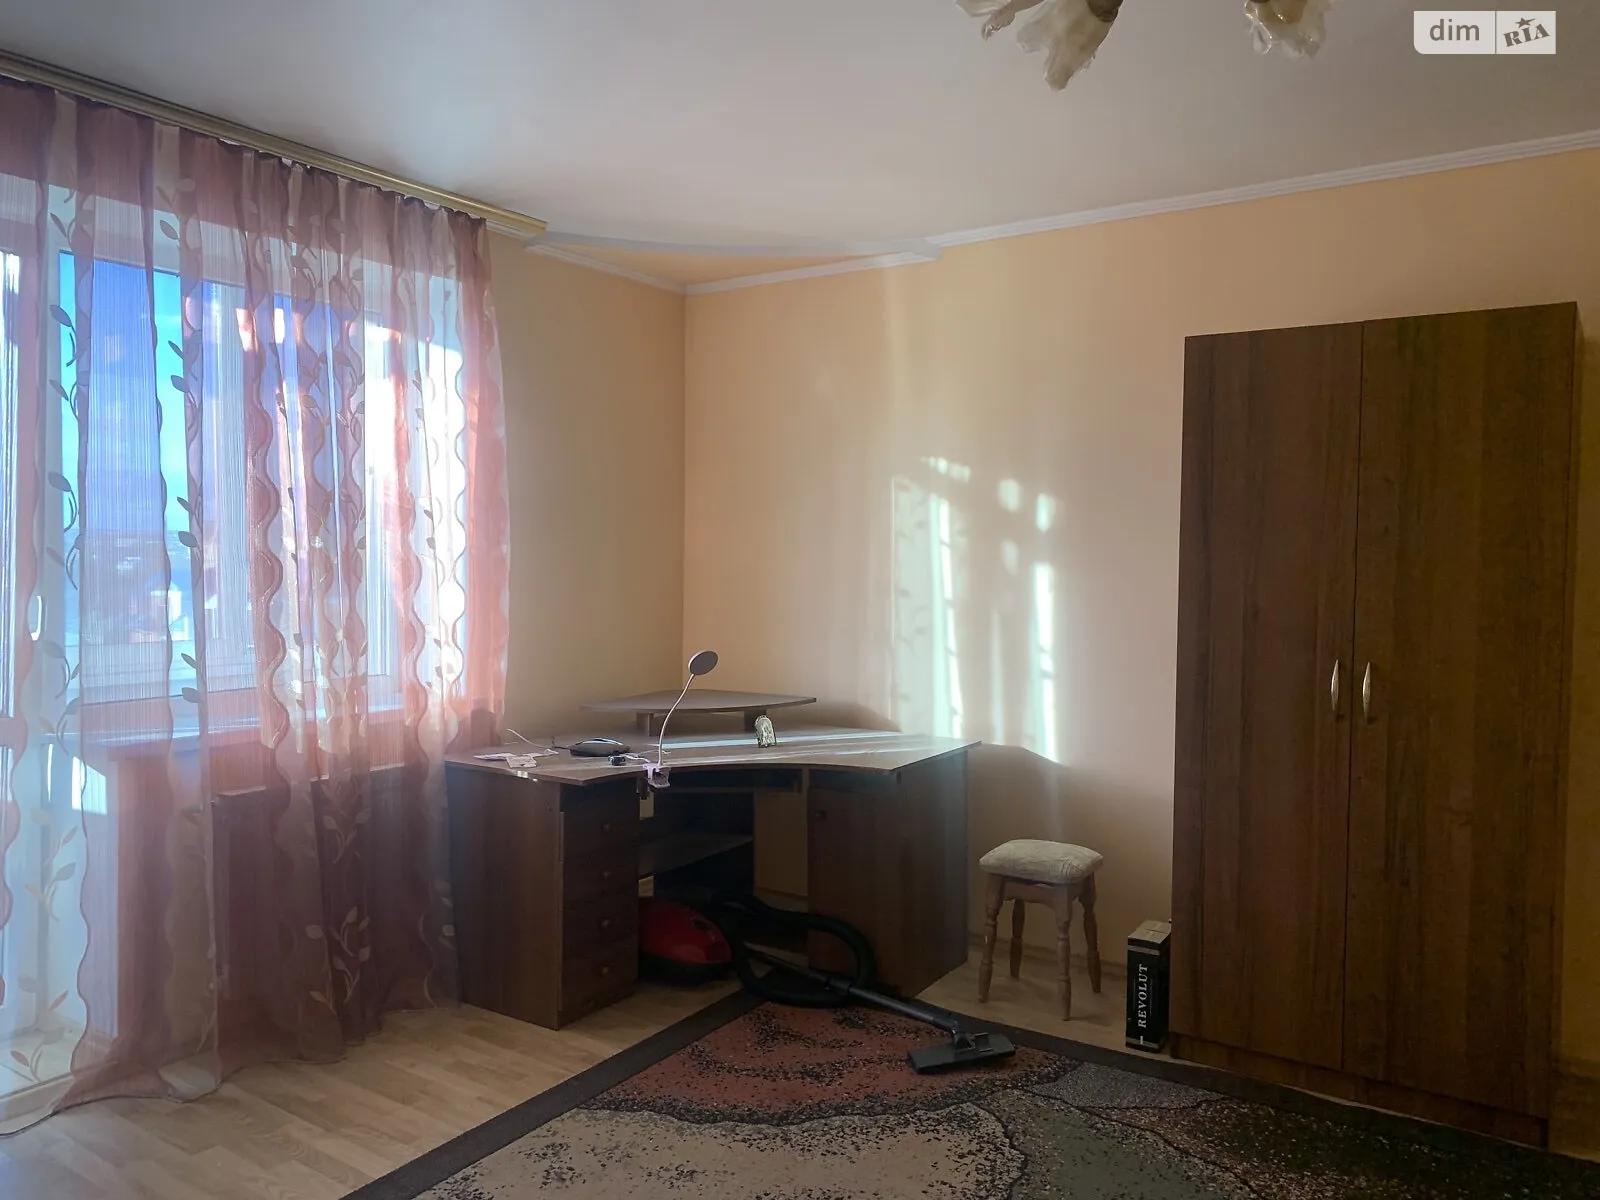 Сдается в аренду 1-комнатная квартира 45 кв. м в Ивано-Франковске - фото 2